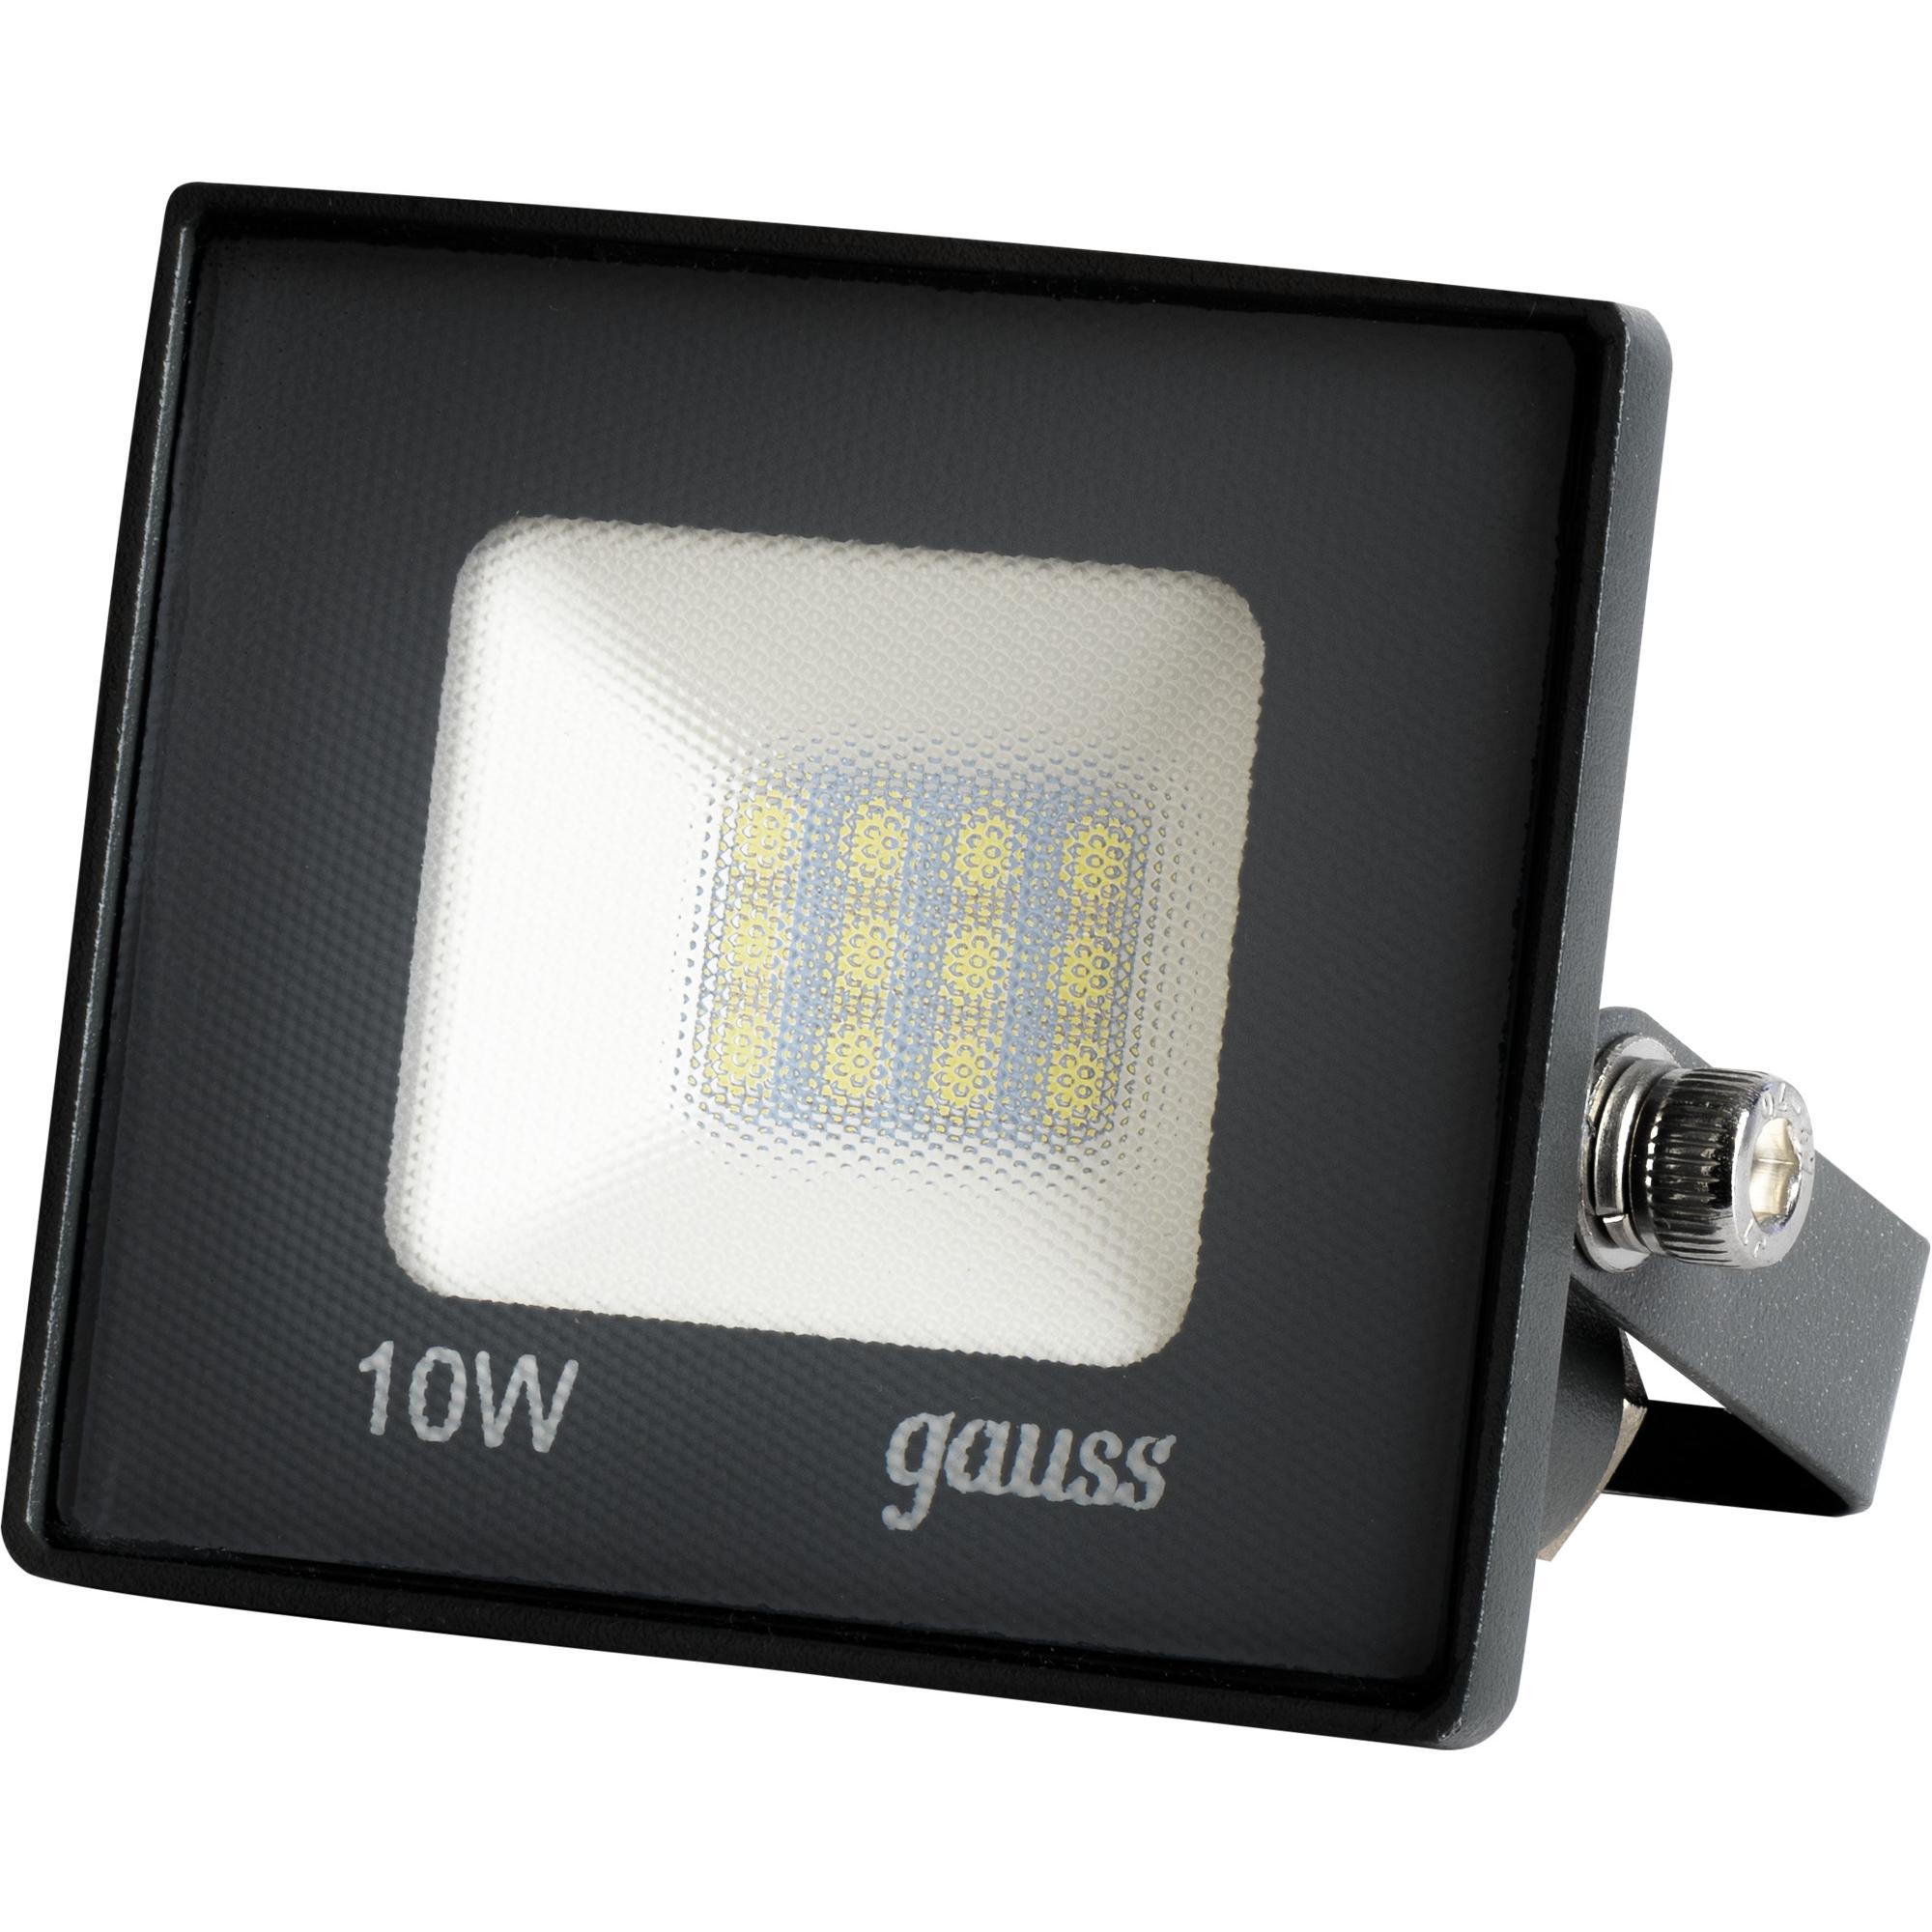 Прожектор gauss led. Прожектор Gauss 10вт. Прожектор светодиодный "Союз" (Neox) 10вт sflsled-SMD-10-865-gr-ip65. Прожектор Gauss led 10w. SMD Gauss Basic 20 Вт 6500к ip65.